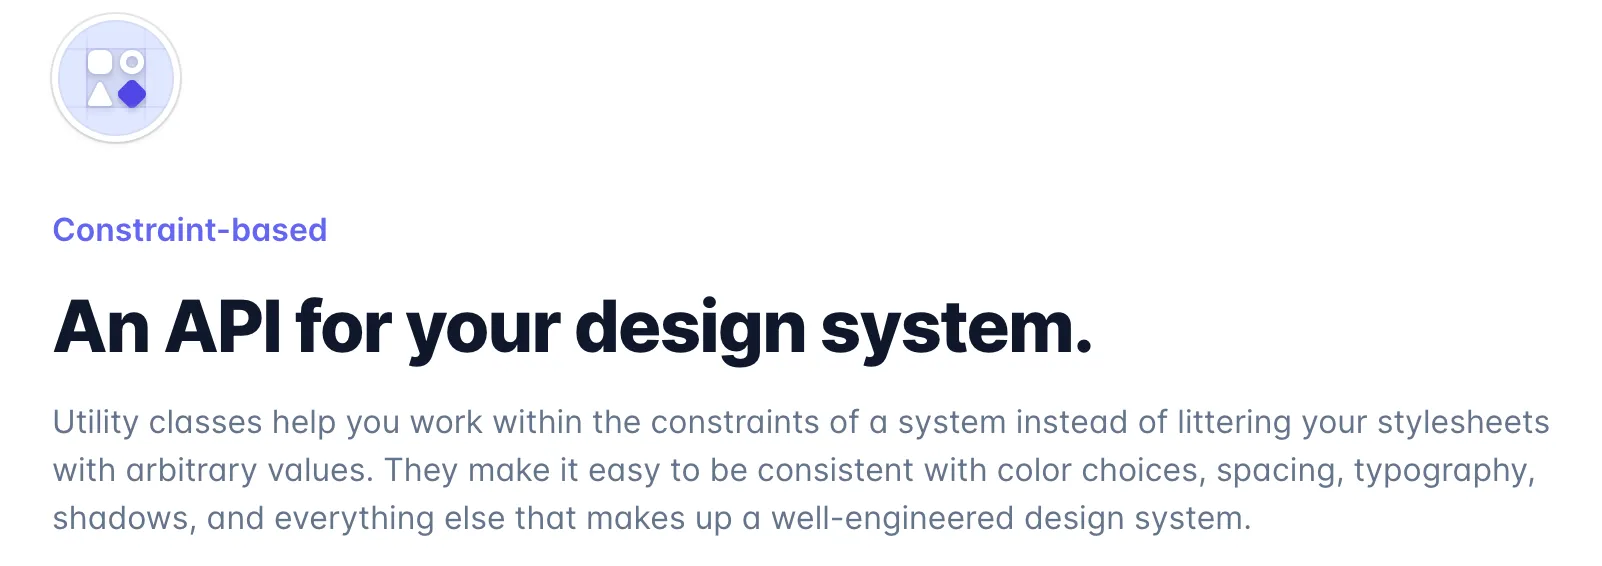 “An API for your design system”